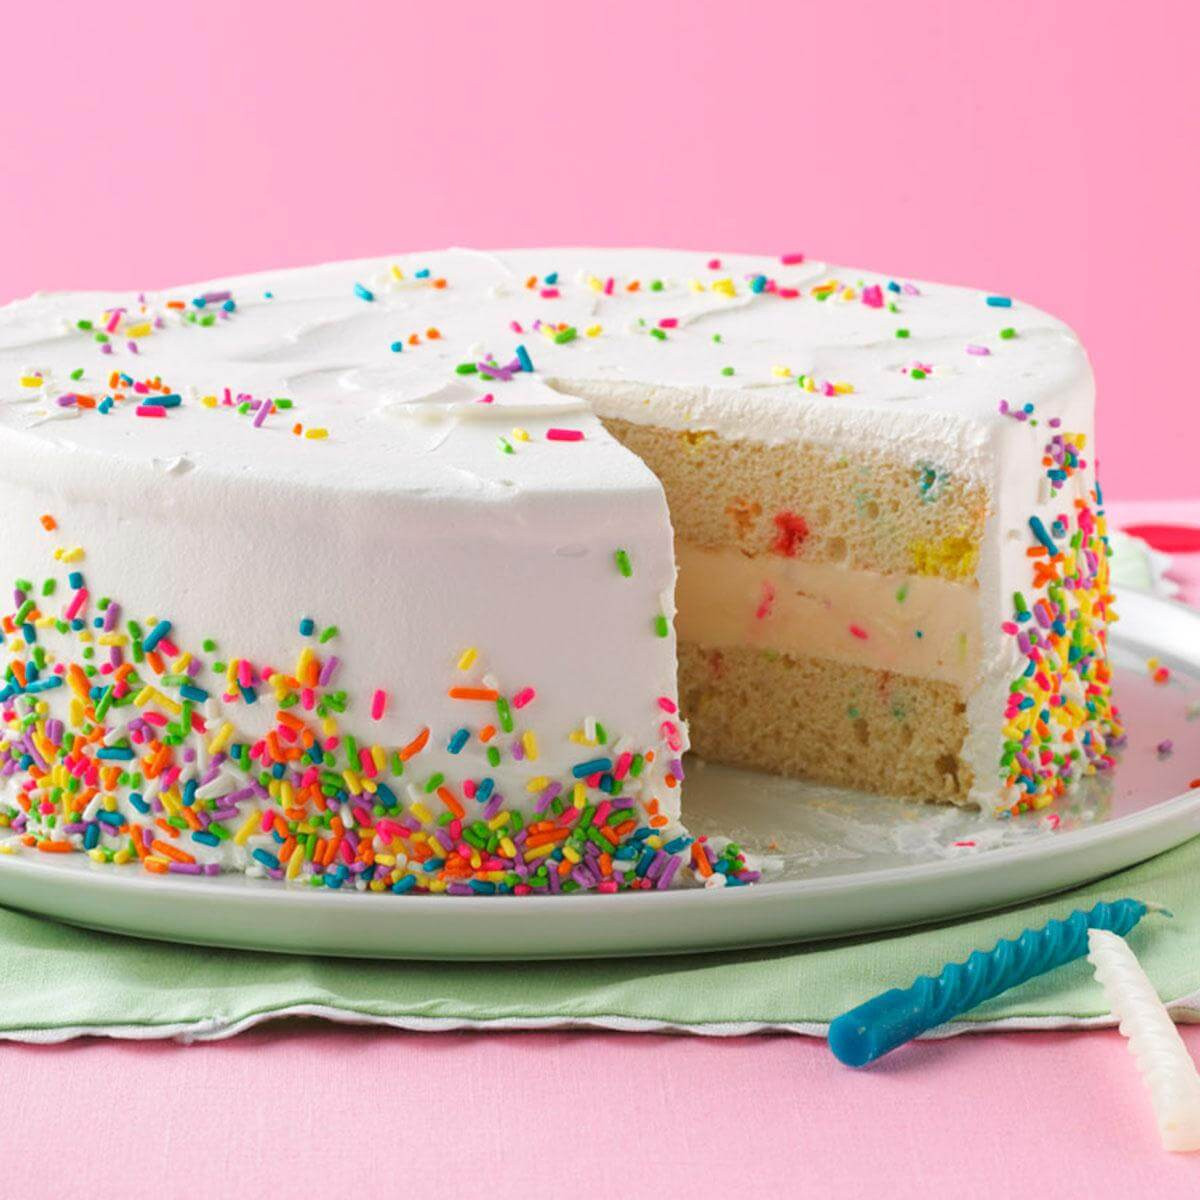 Best ideas about Ice Cream Birthday Cake
. Save or Pin Ice Cream Birthday Cake Recipe Now.